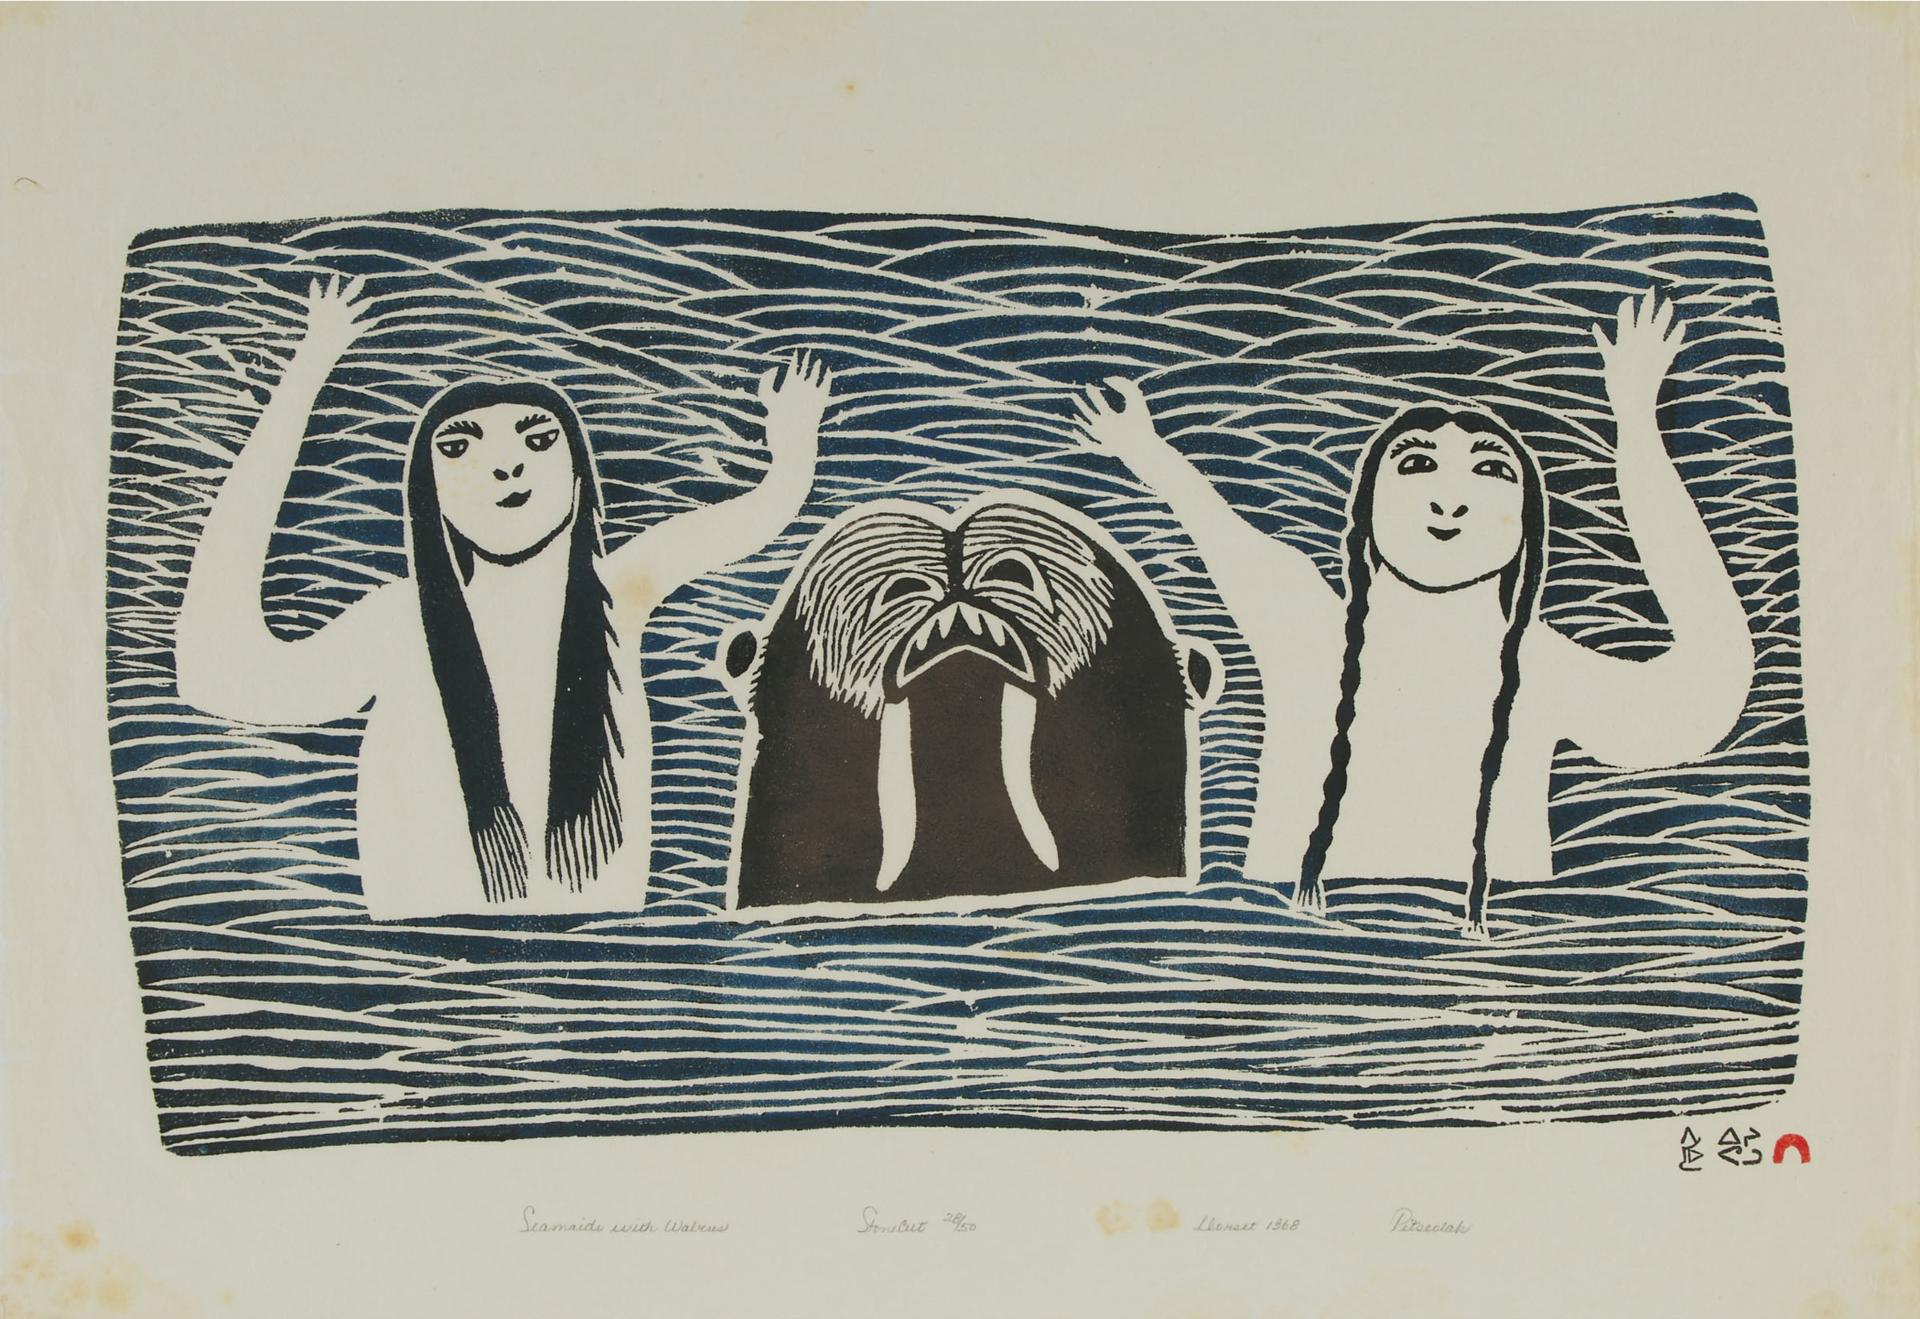 Pitseolak Ashoona (1904-1983) - Seamaids And Walrus